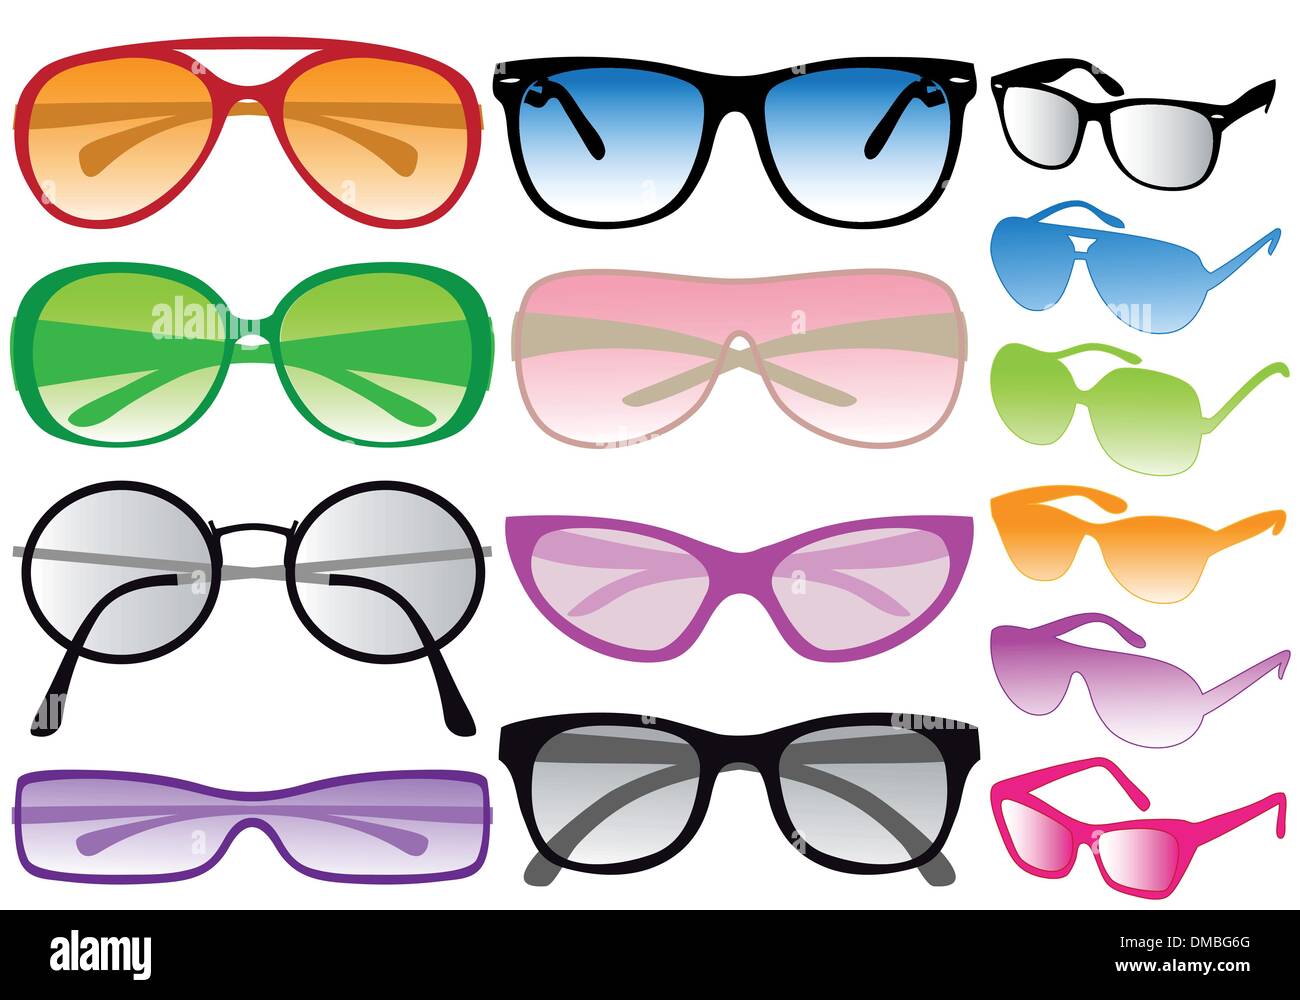 Sunglasses Icon Cartoon Illustration Sunglasses Vector Stock Vector  (Royalty Free) 533191615 | Shutterstock